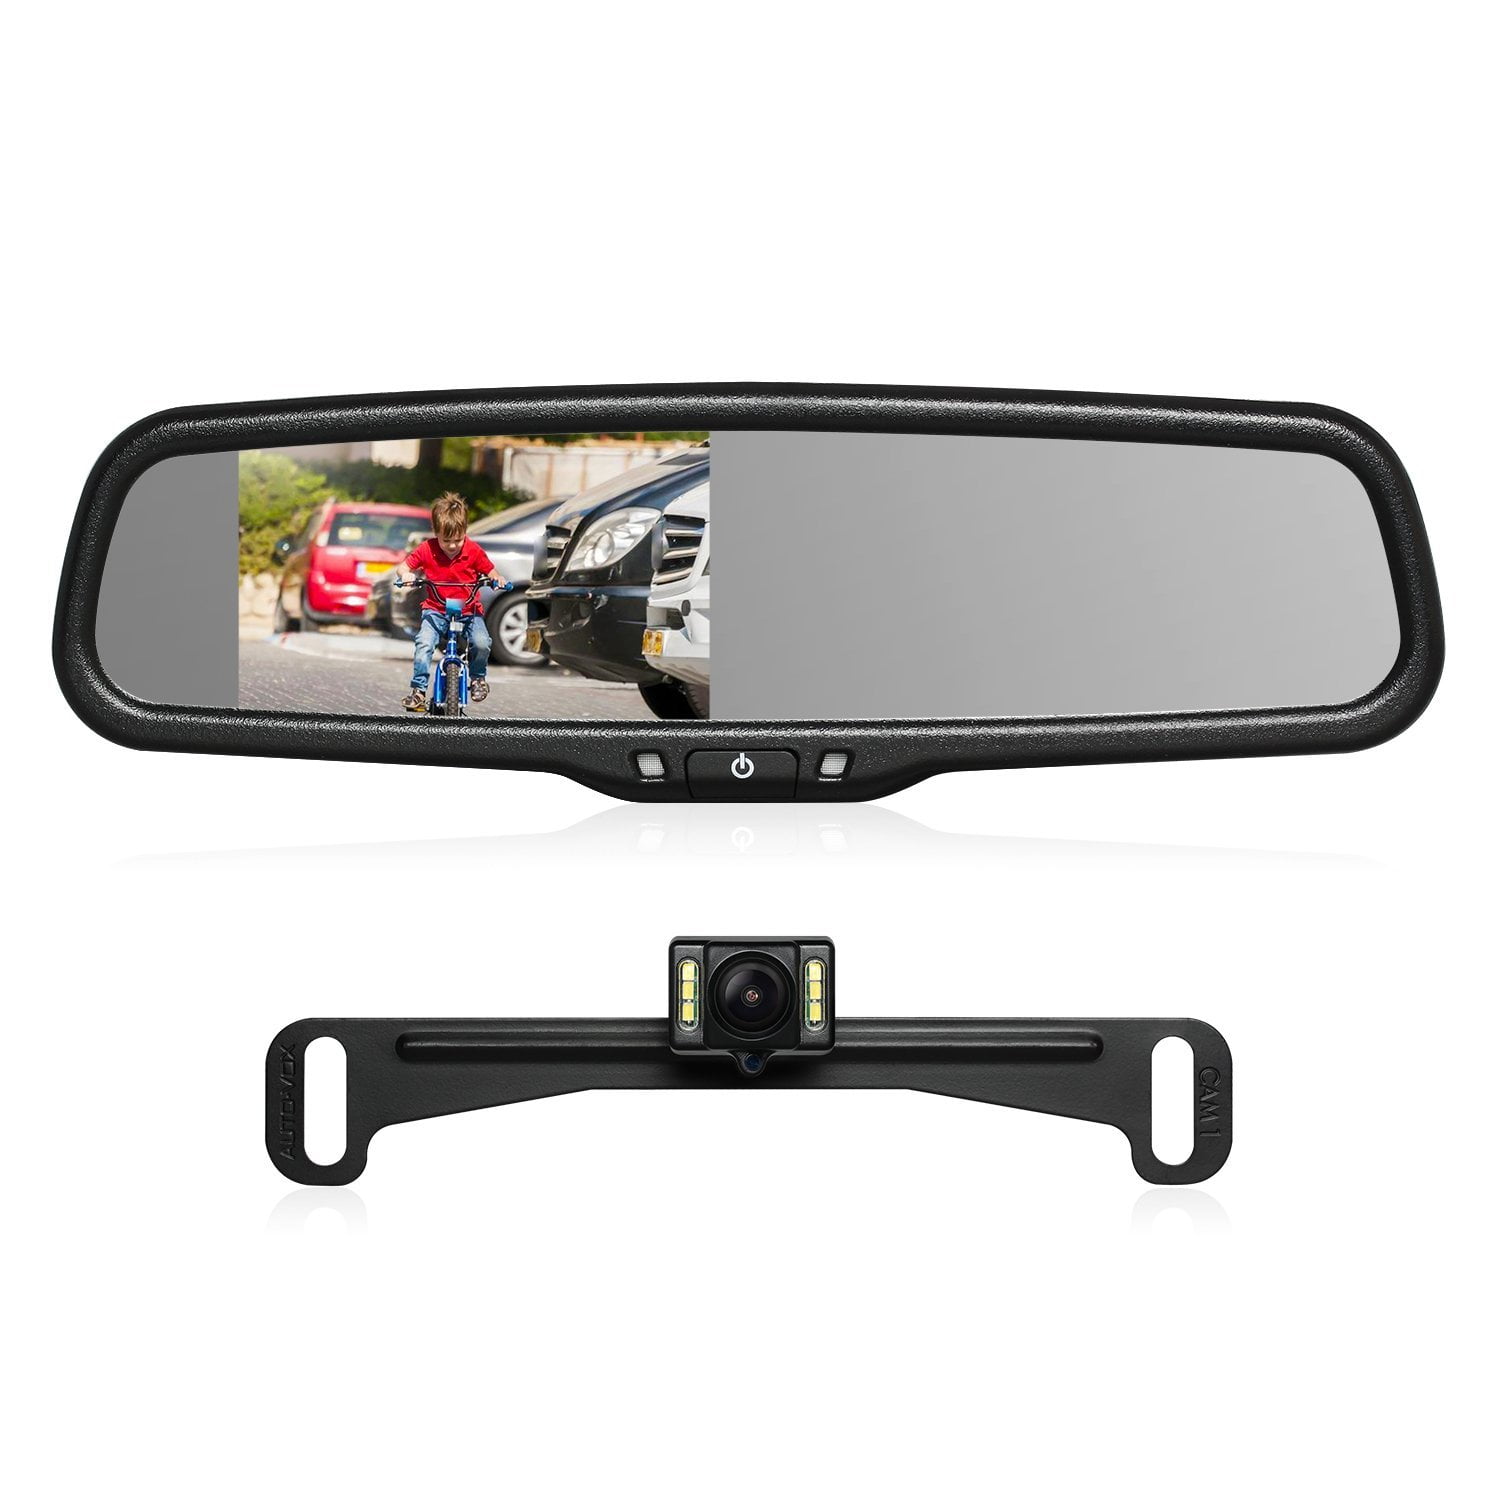 Backup Camera Mirror Car Rear View Reverse Night Vision Parking System Kit US 